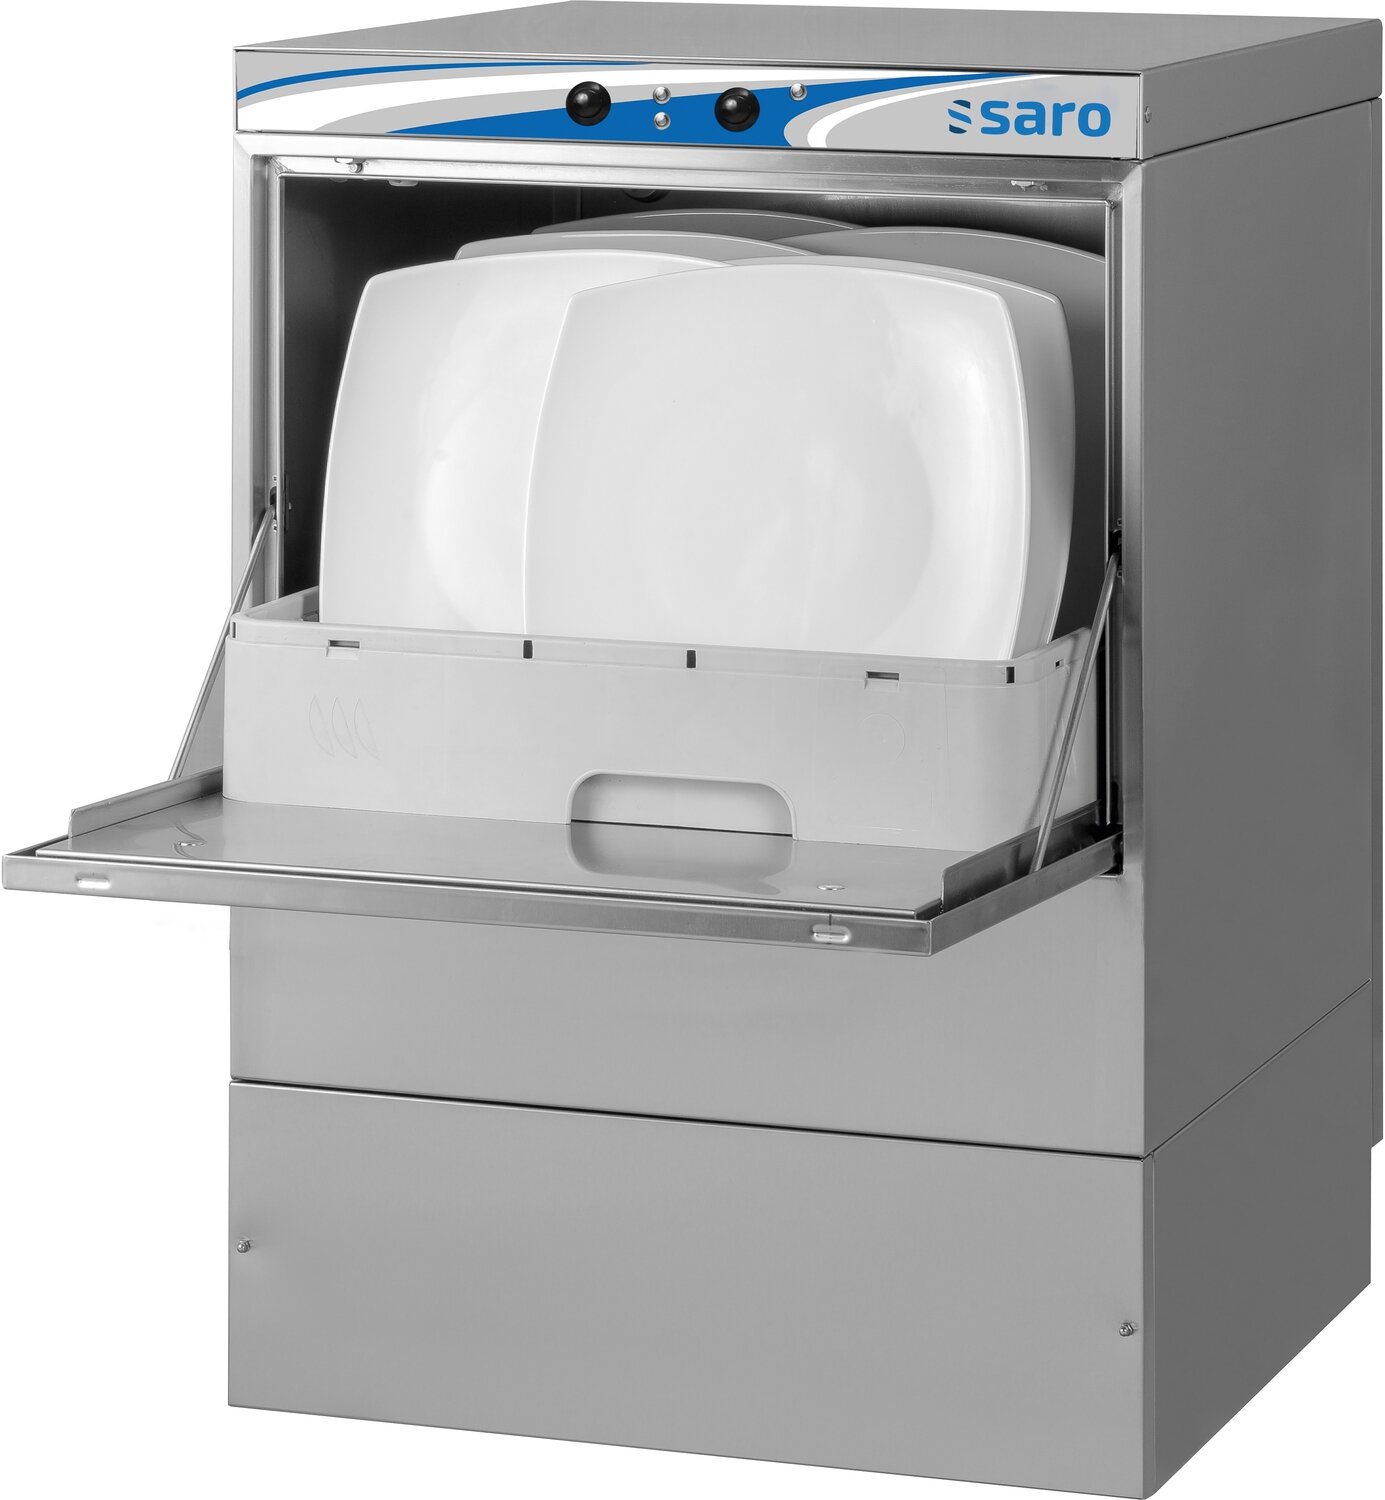 SARO Dishwasher model MARBURG 400